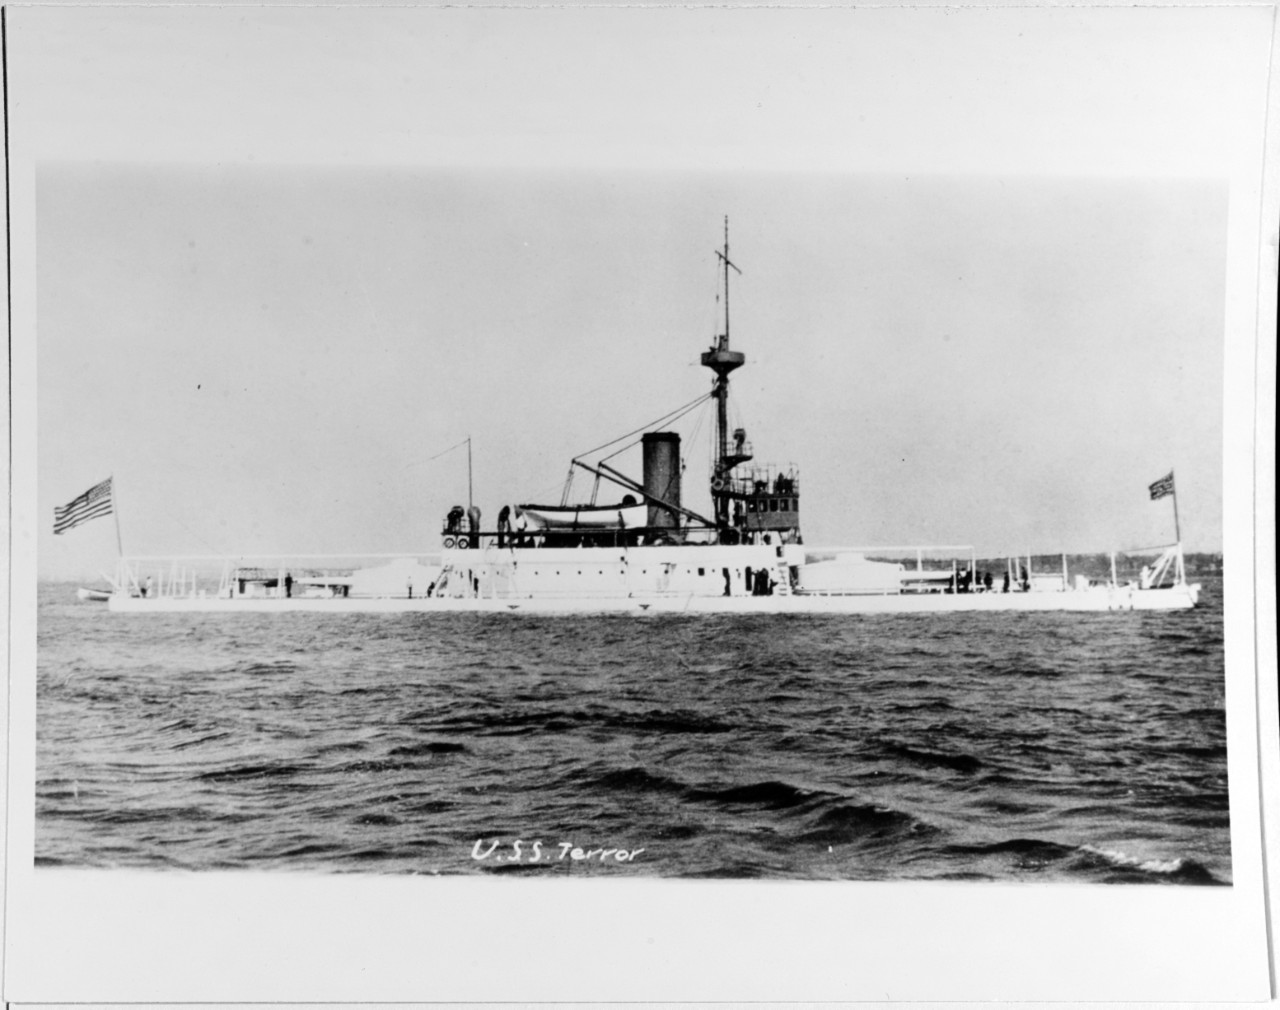 USS TERROR (BM-4)